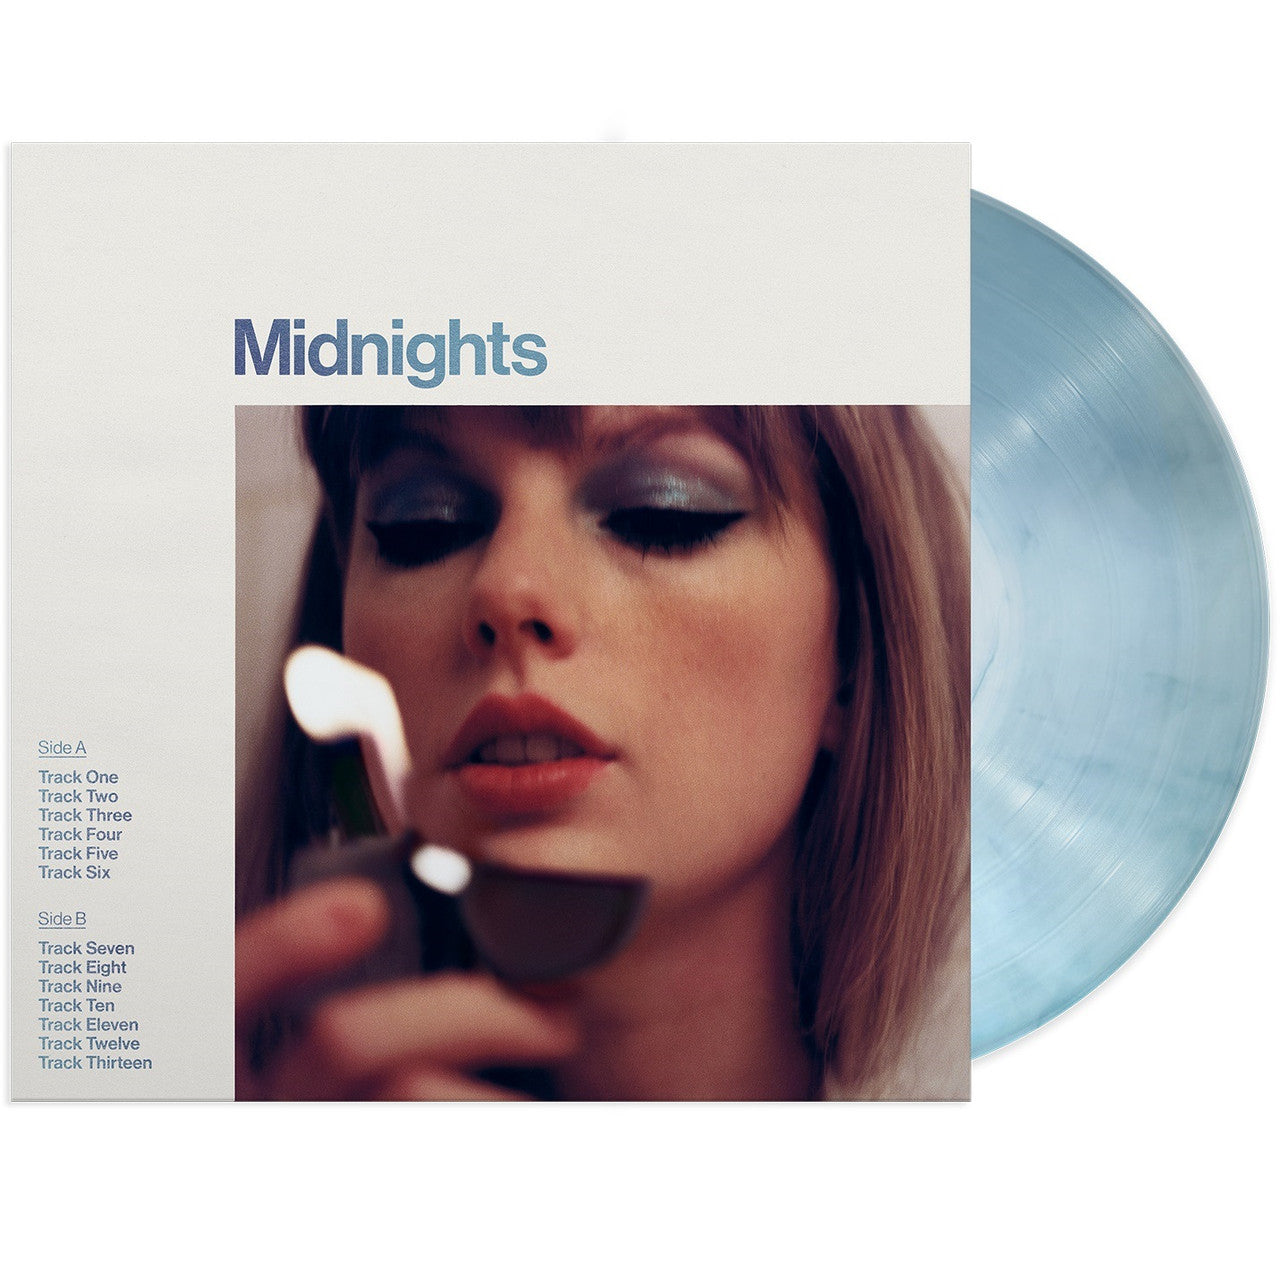 Swift, Taylor - Midnights